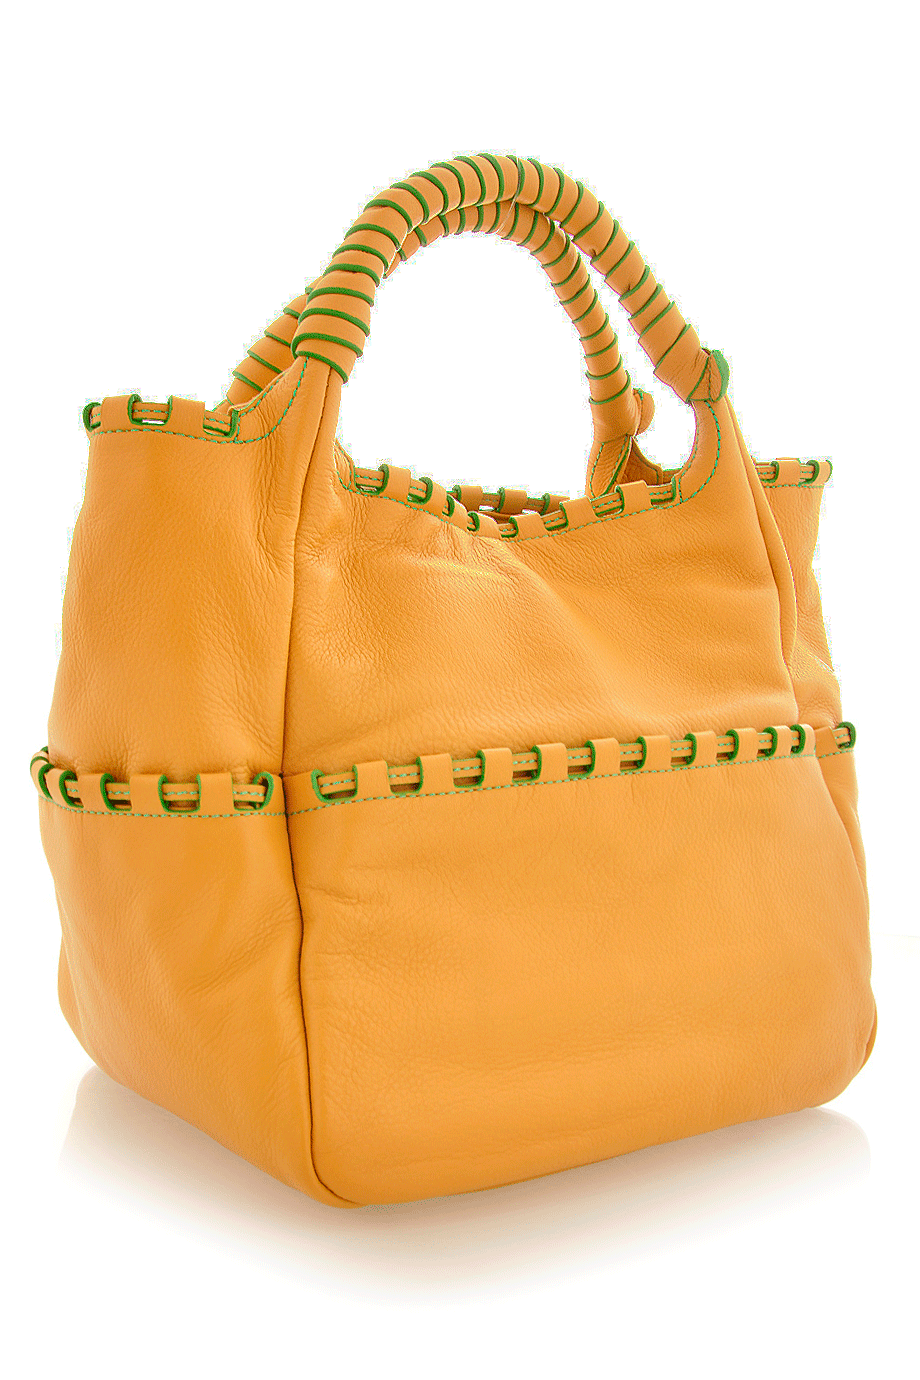 Alston Yellow Leather Bag